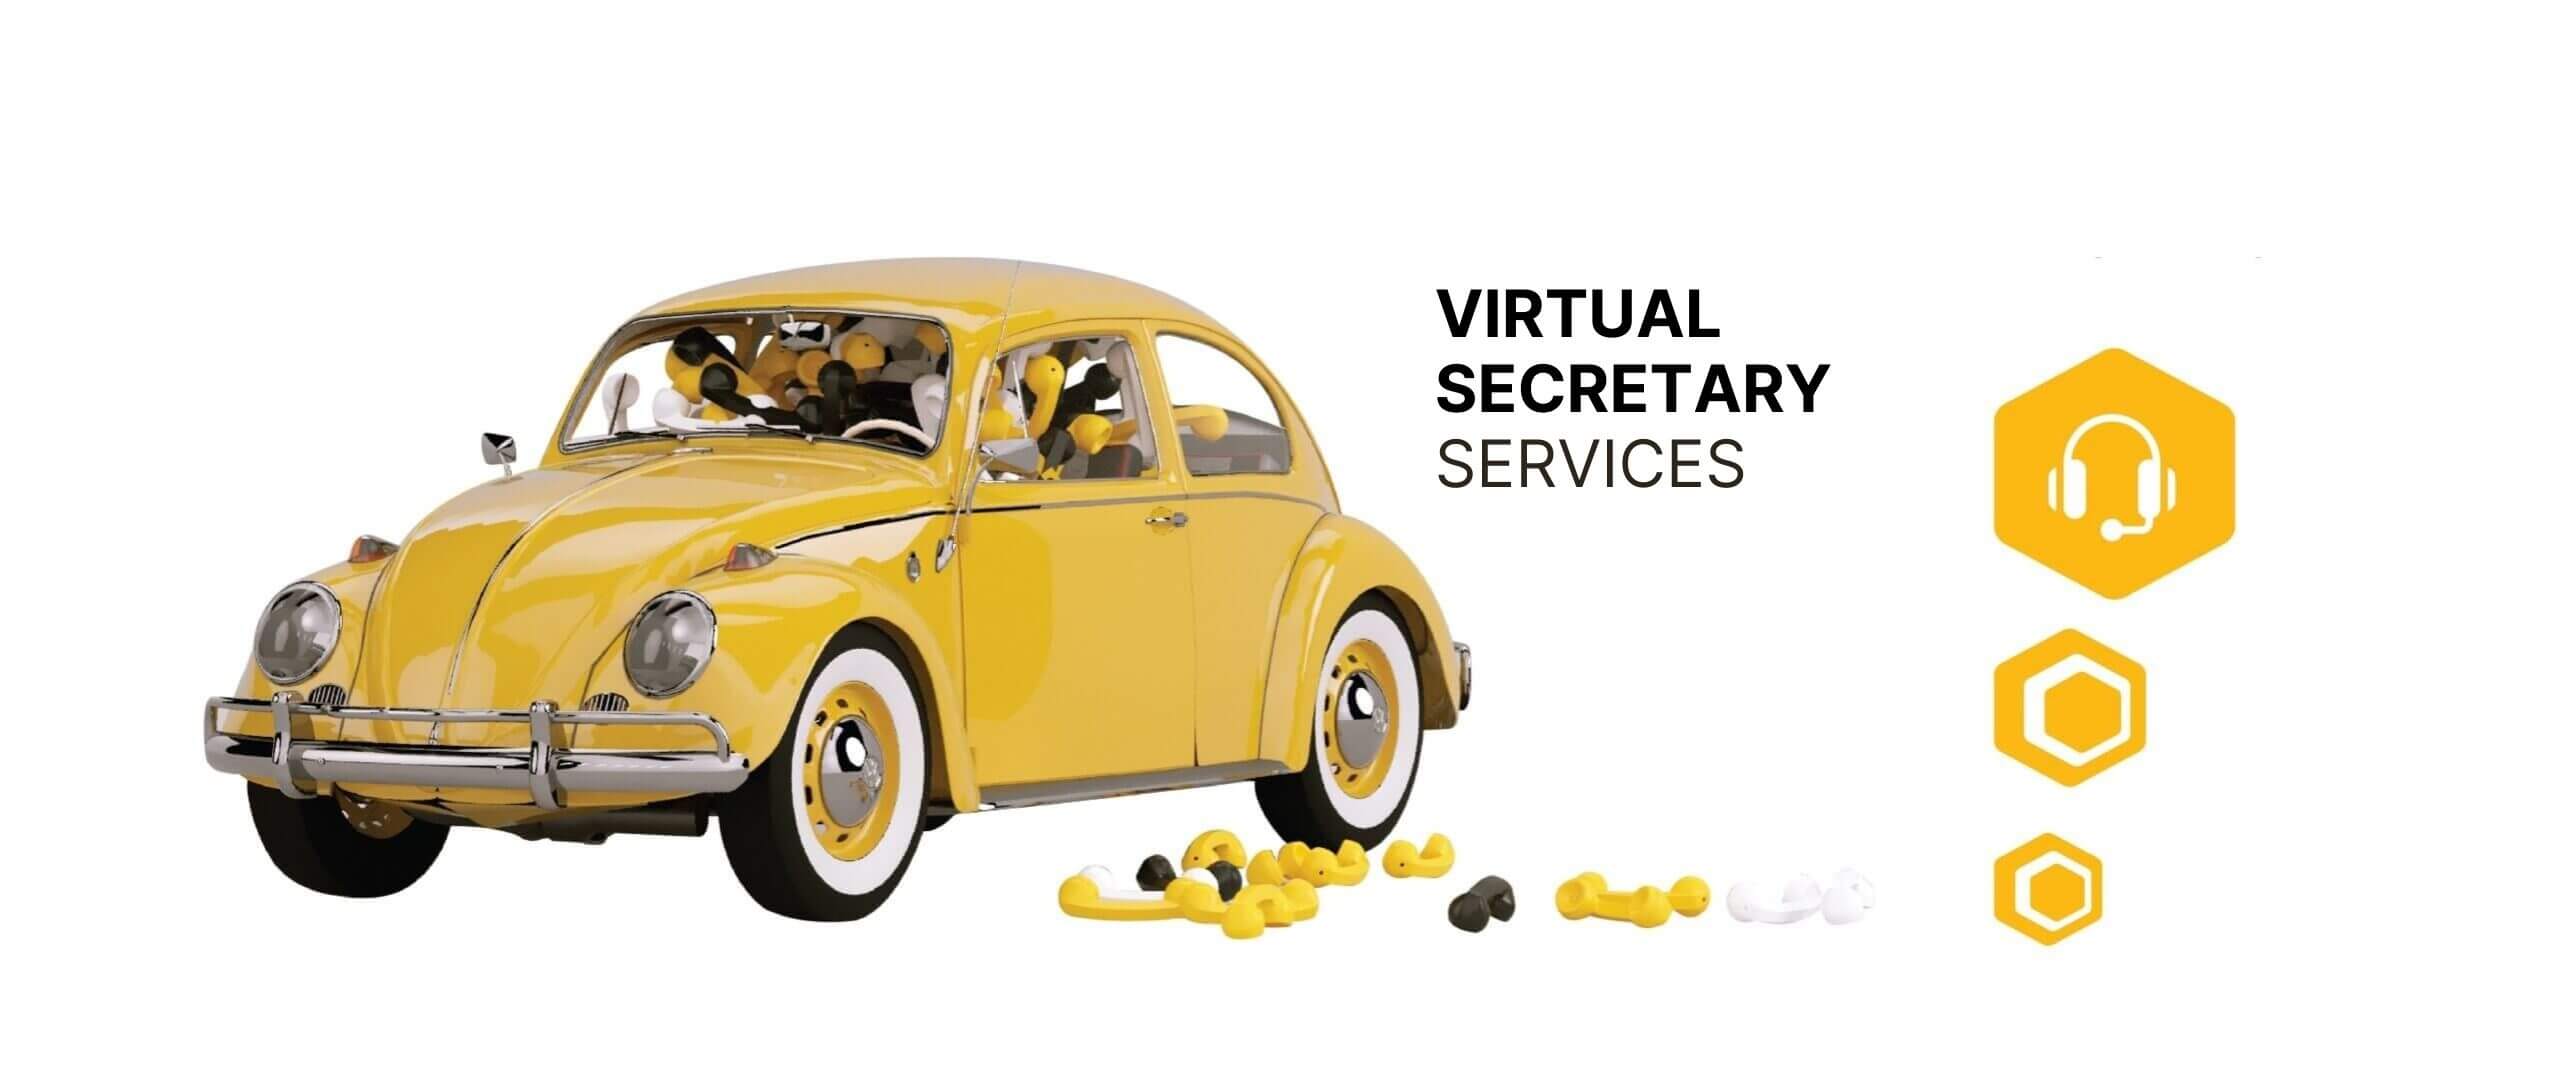 Virtual Secretary Services - beeasy